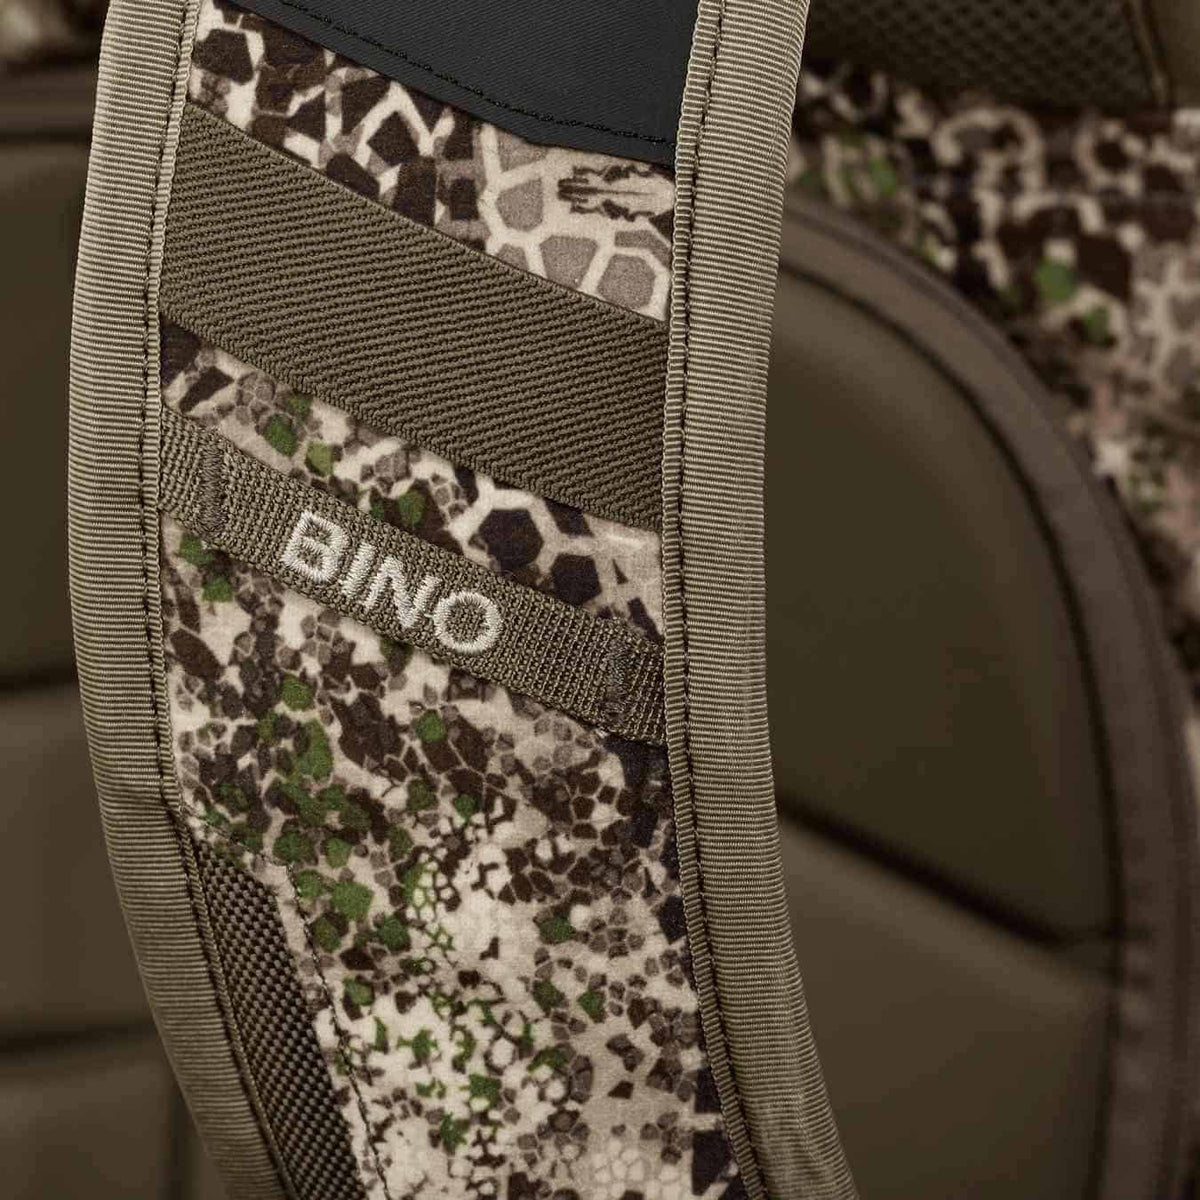 Badlands Packs 2200 Hunting Backpack 2020 Model Approach Camo Back Additional Zipper Detail